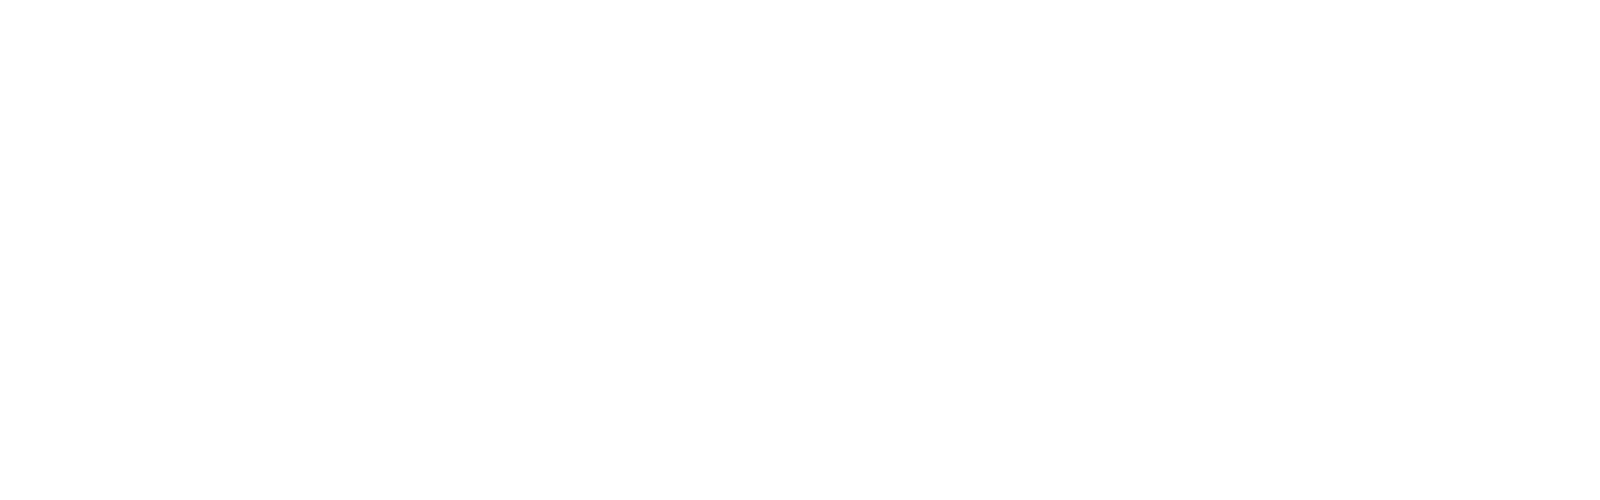 MarbleShop